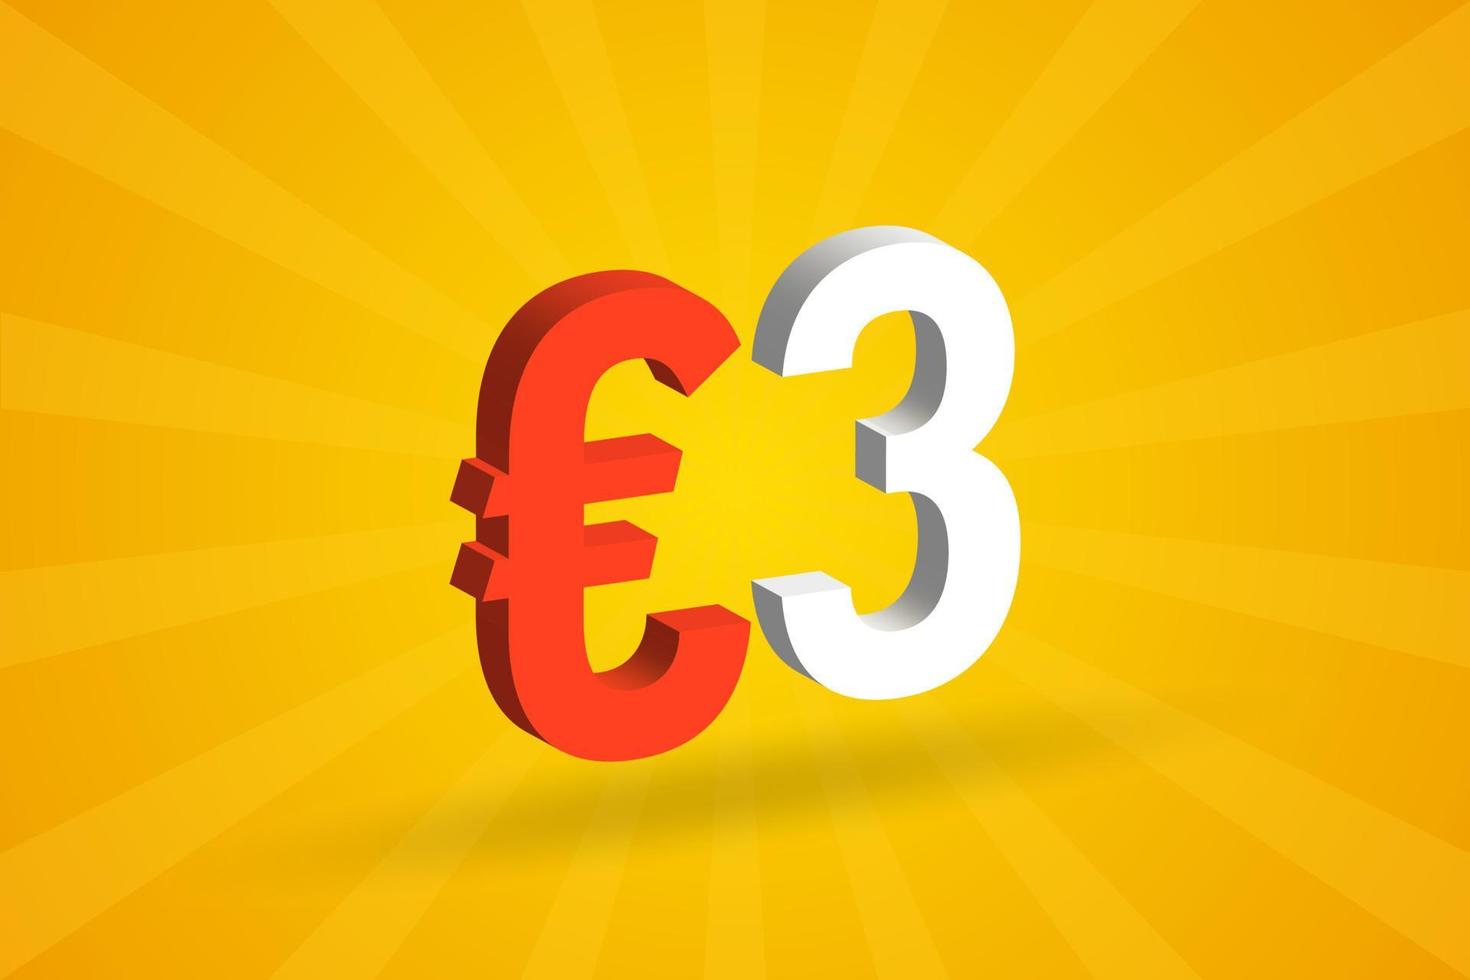 3 Euro Currency 3D vector text symbol. 3D 3 Euro European Union Money stock vector